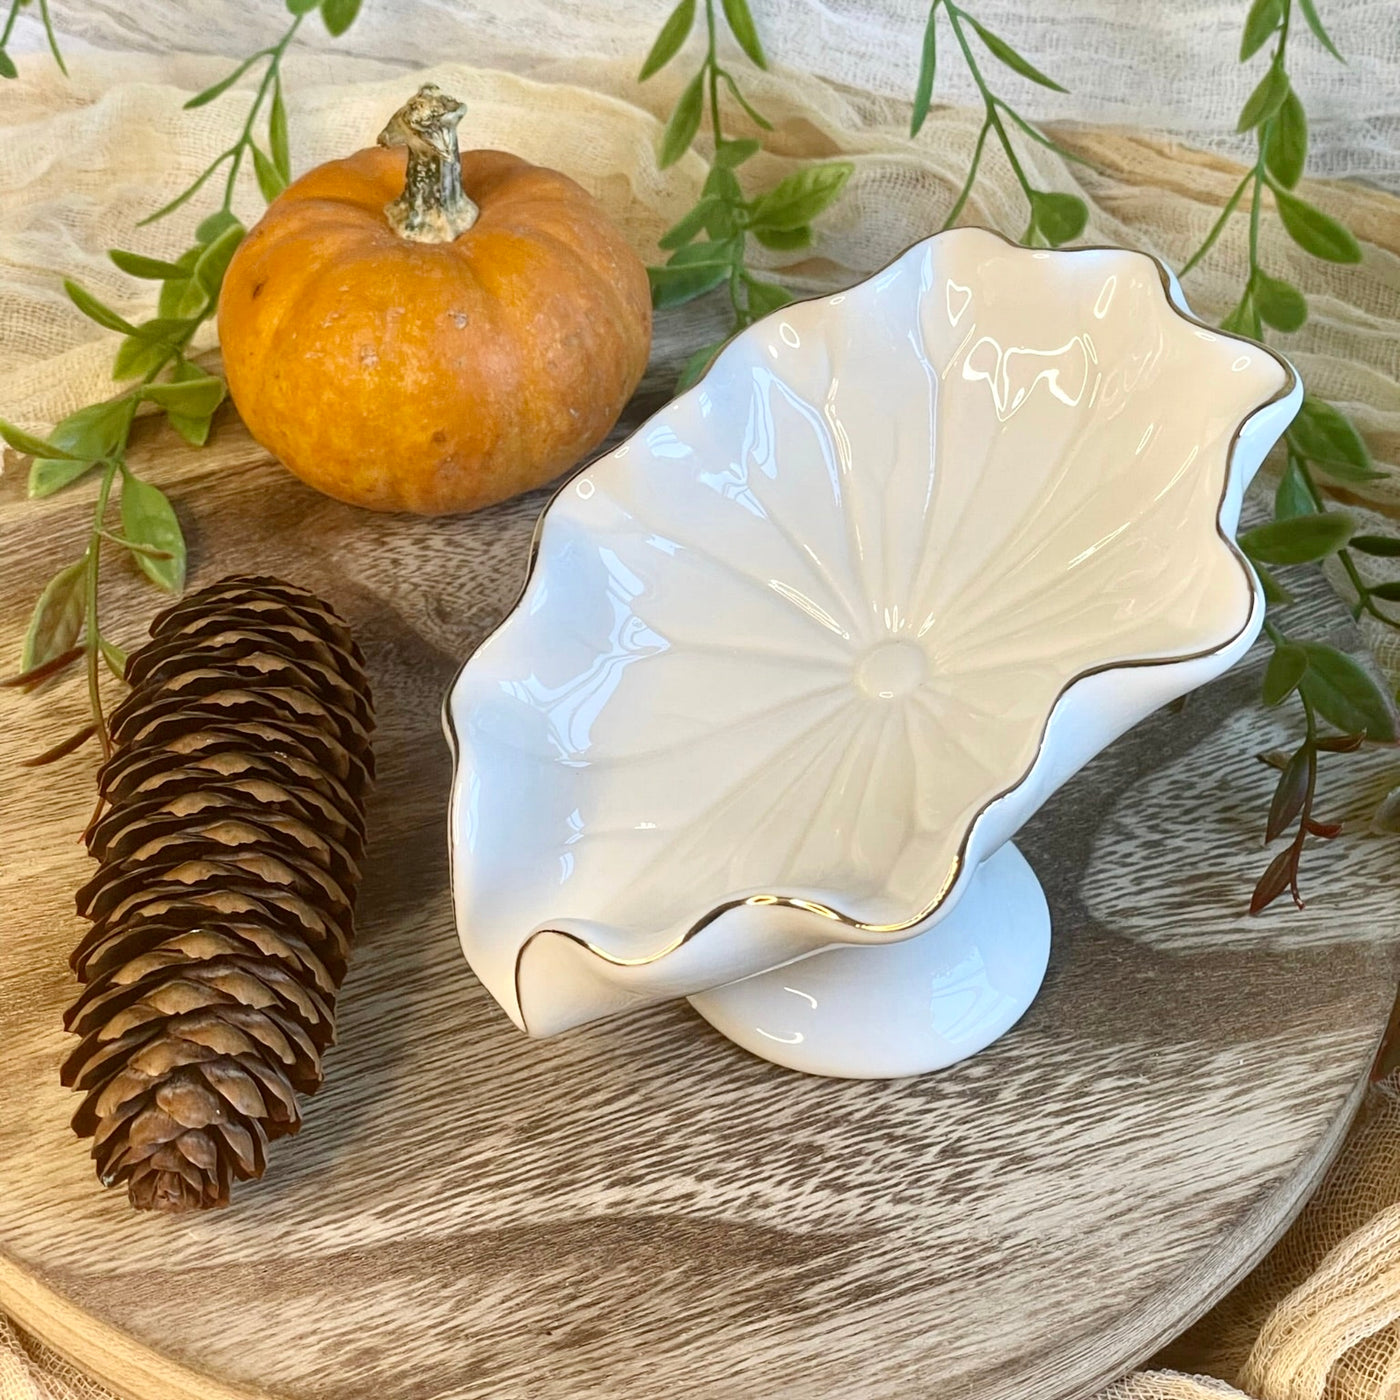 Ceramic White Lotus Leaf Shape Self Draining Soap Dish - Nina's Pure Joy